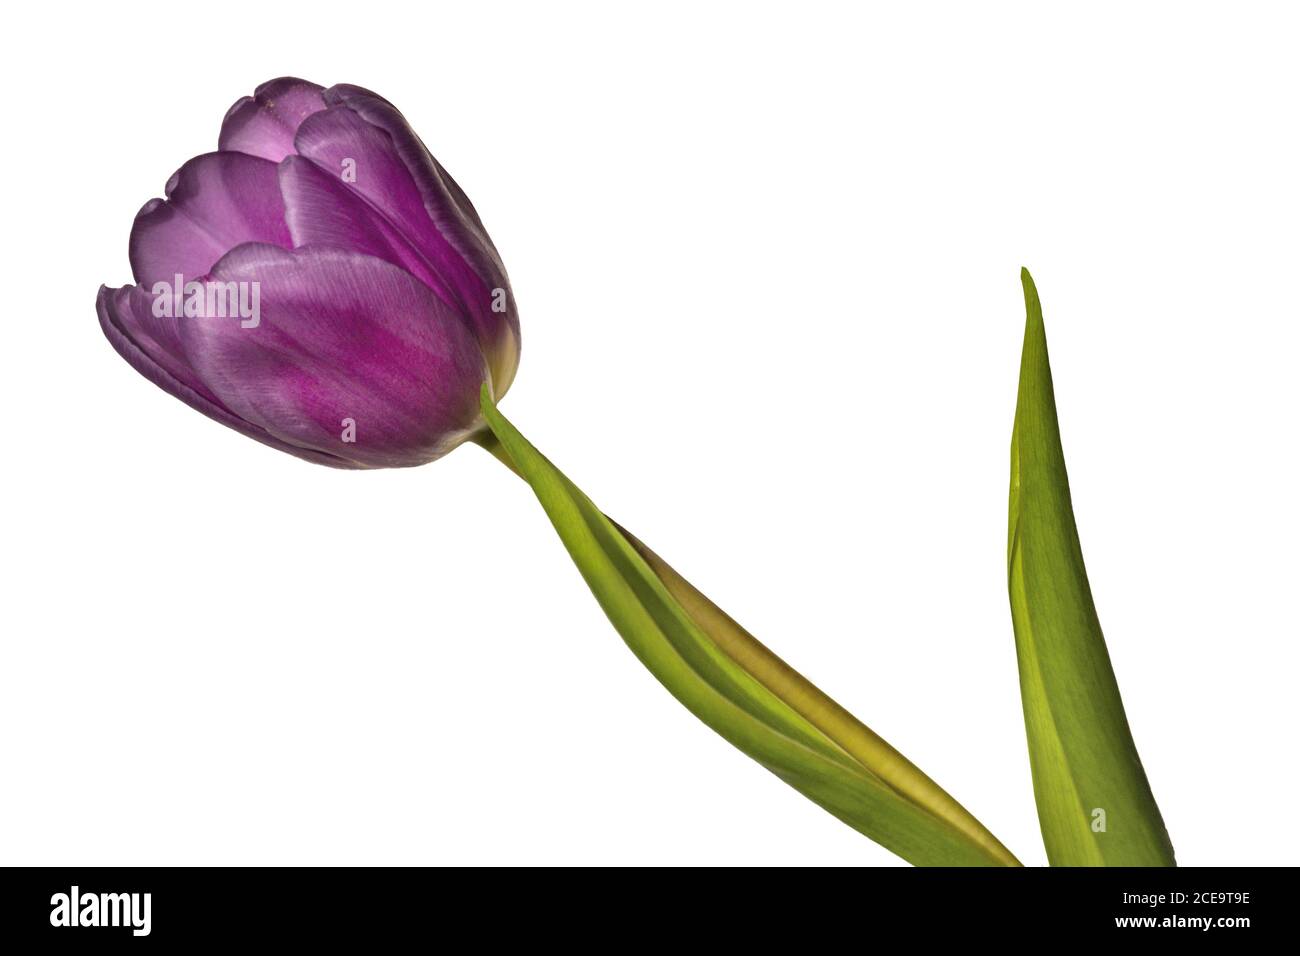 Single purple tulip flower close up, isolated on white background Stock Photo